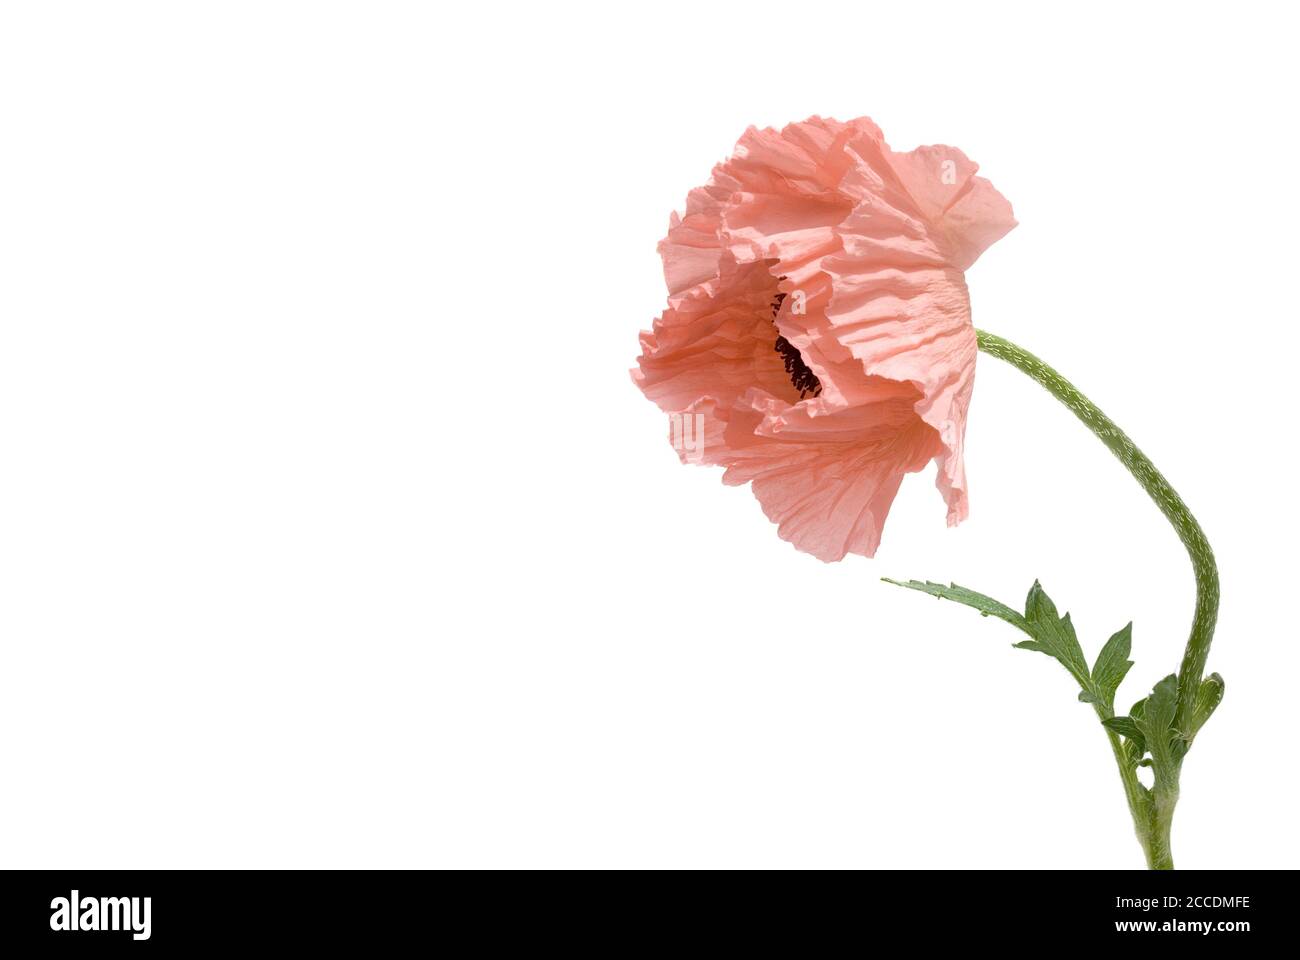 Poppy seeds on a white background Stock Photo